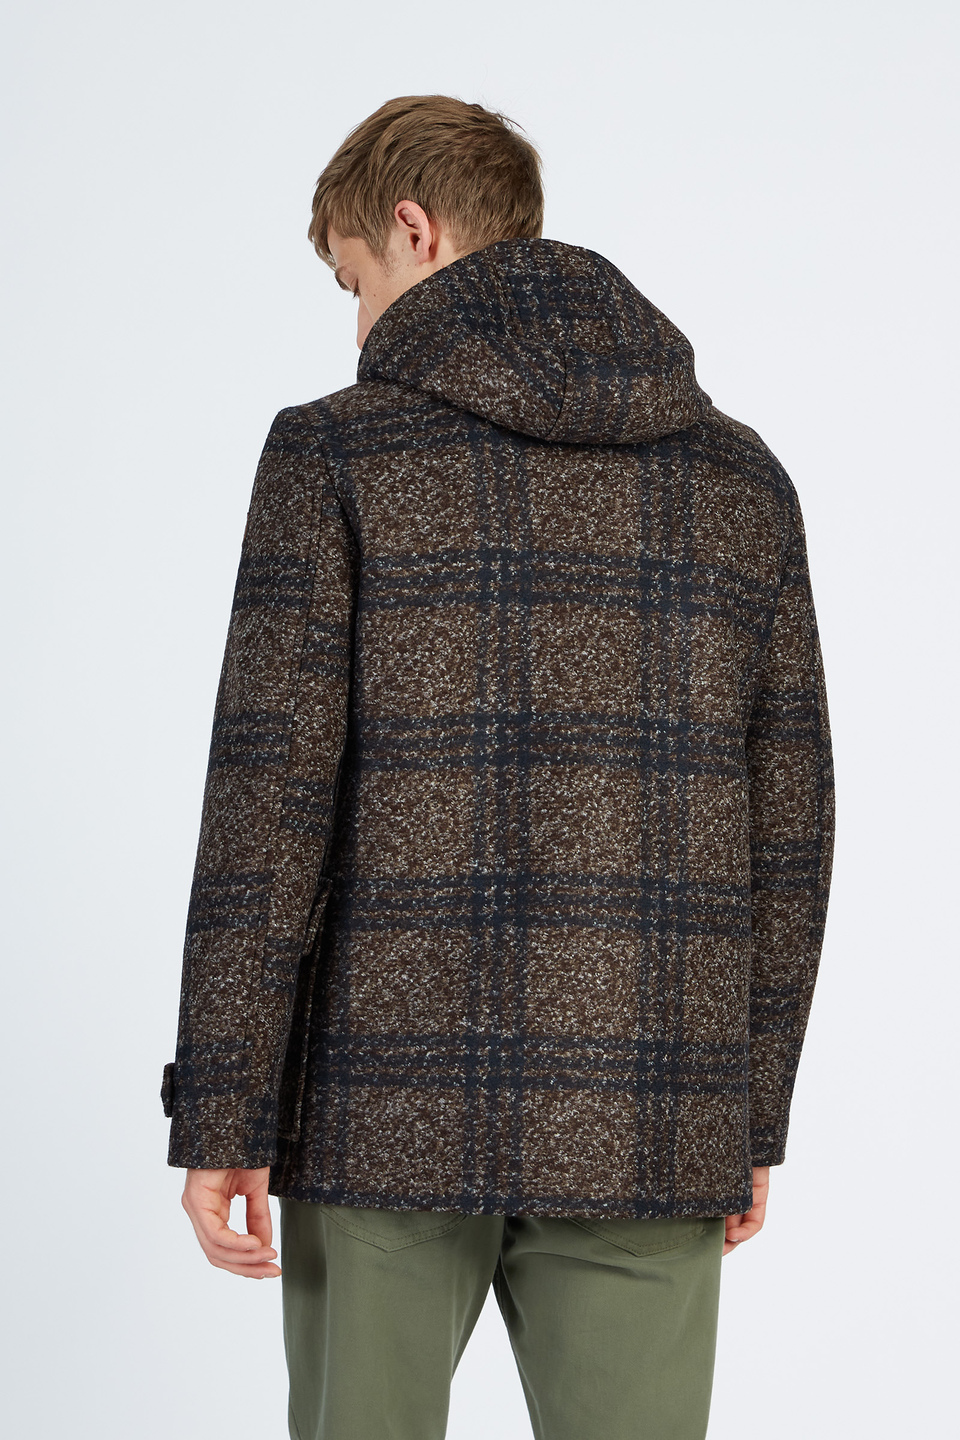 Leyendas Del Polo men’s wool blend jacket with buttons regular fit | La Martina - Official Online Shop